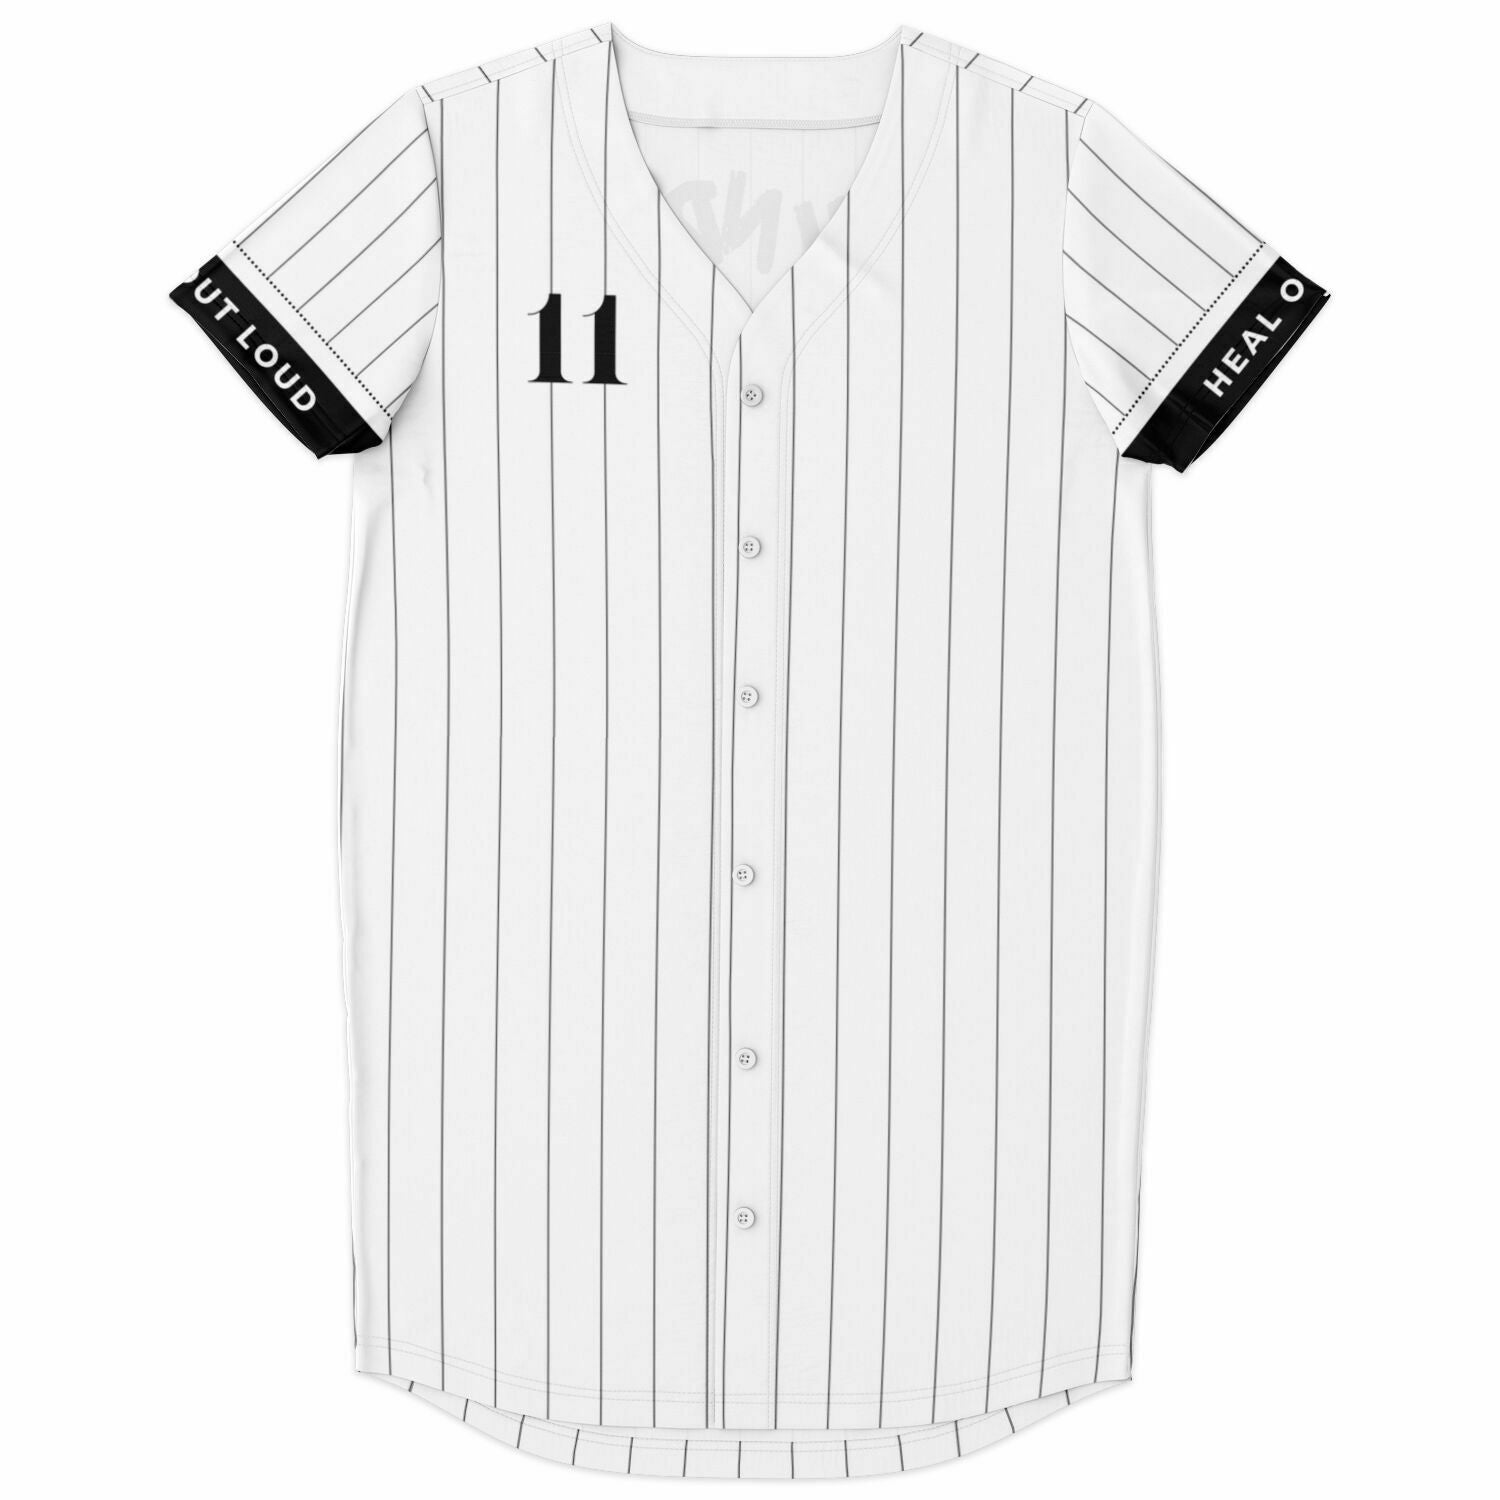 1111 Baseball Jersey Dress – The HOL Code